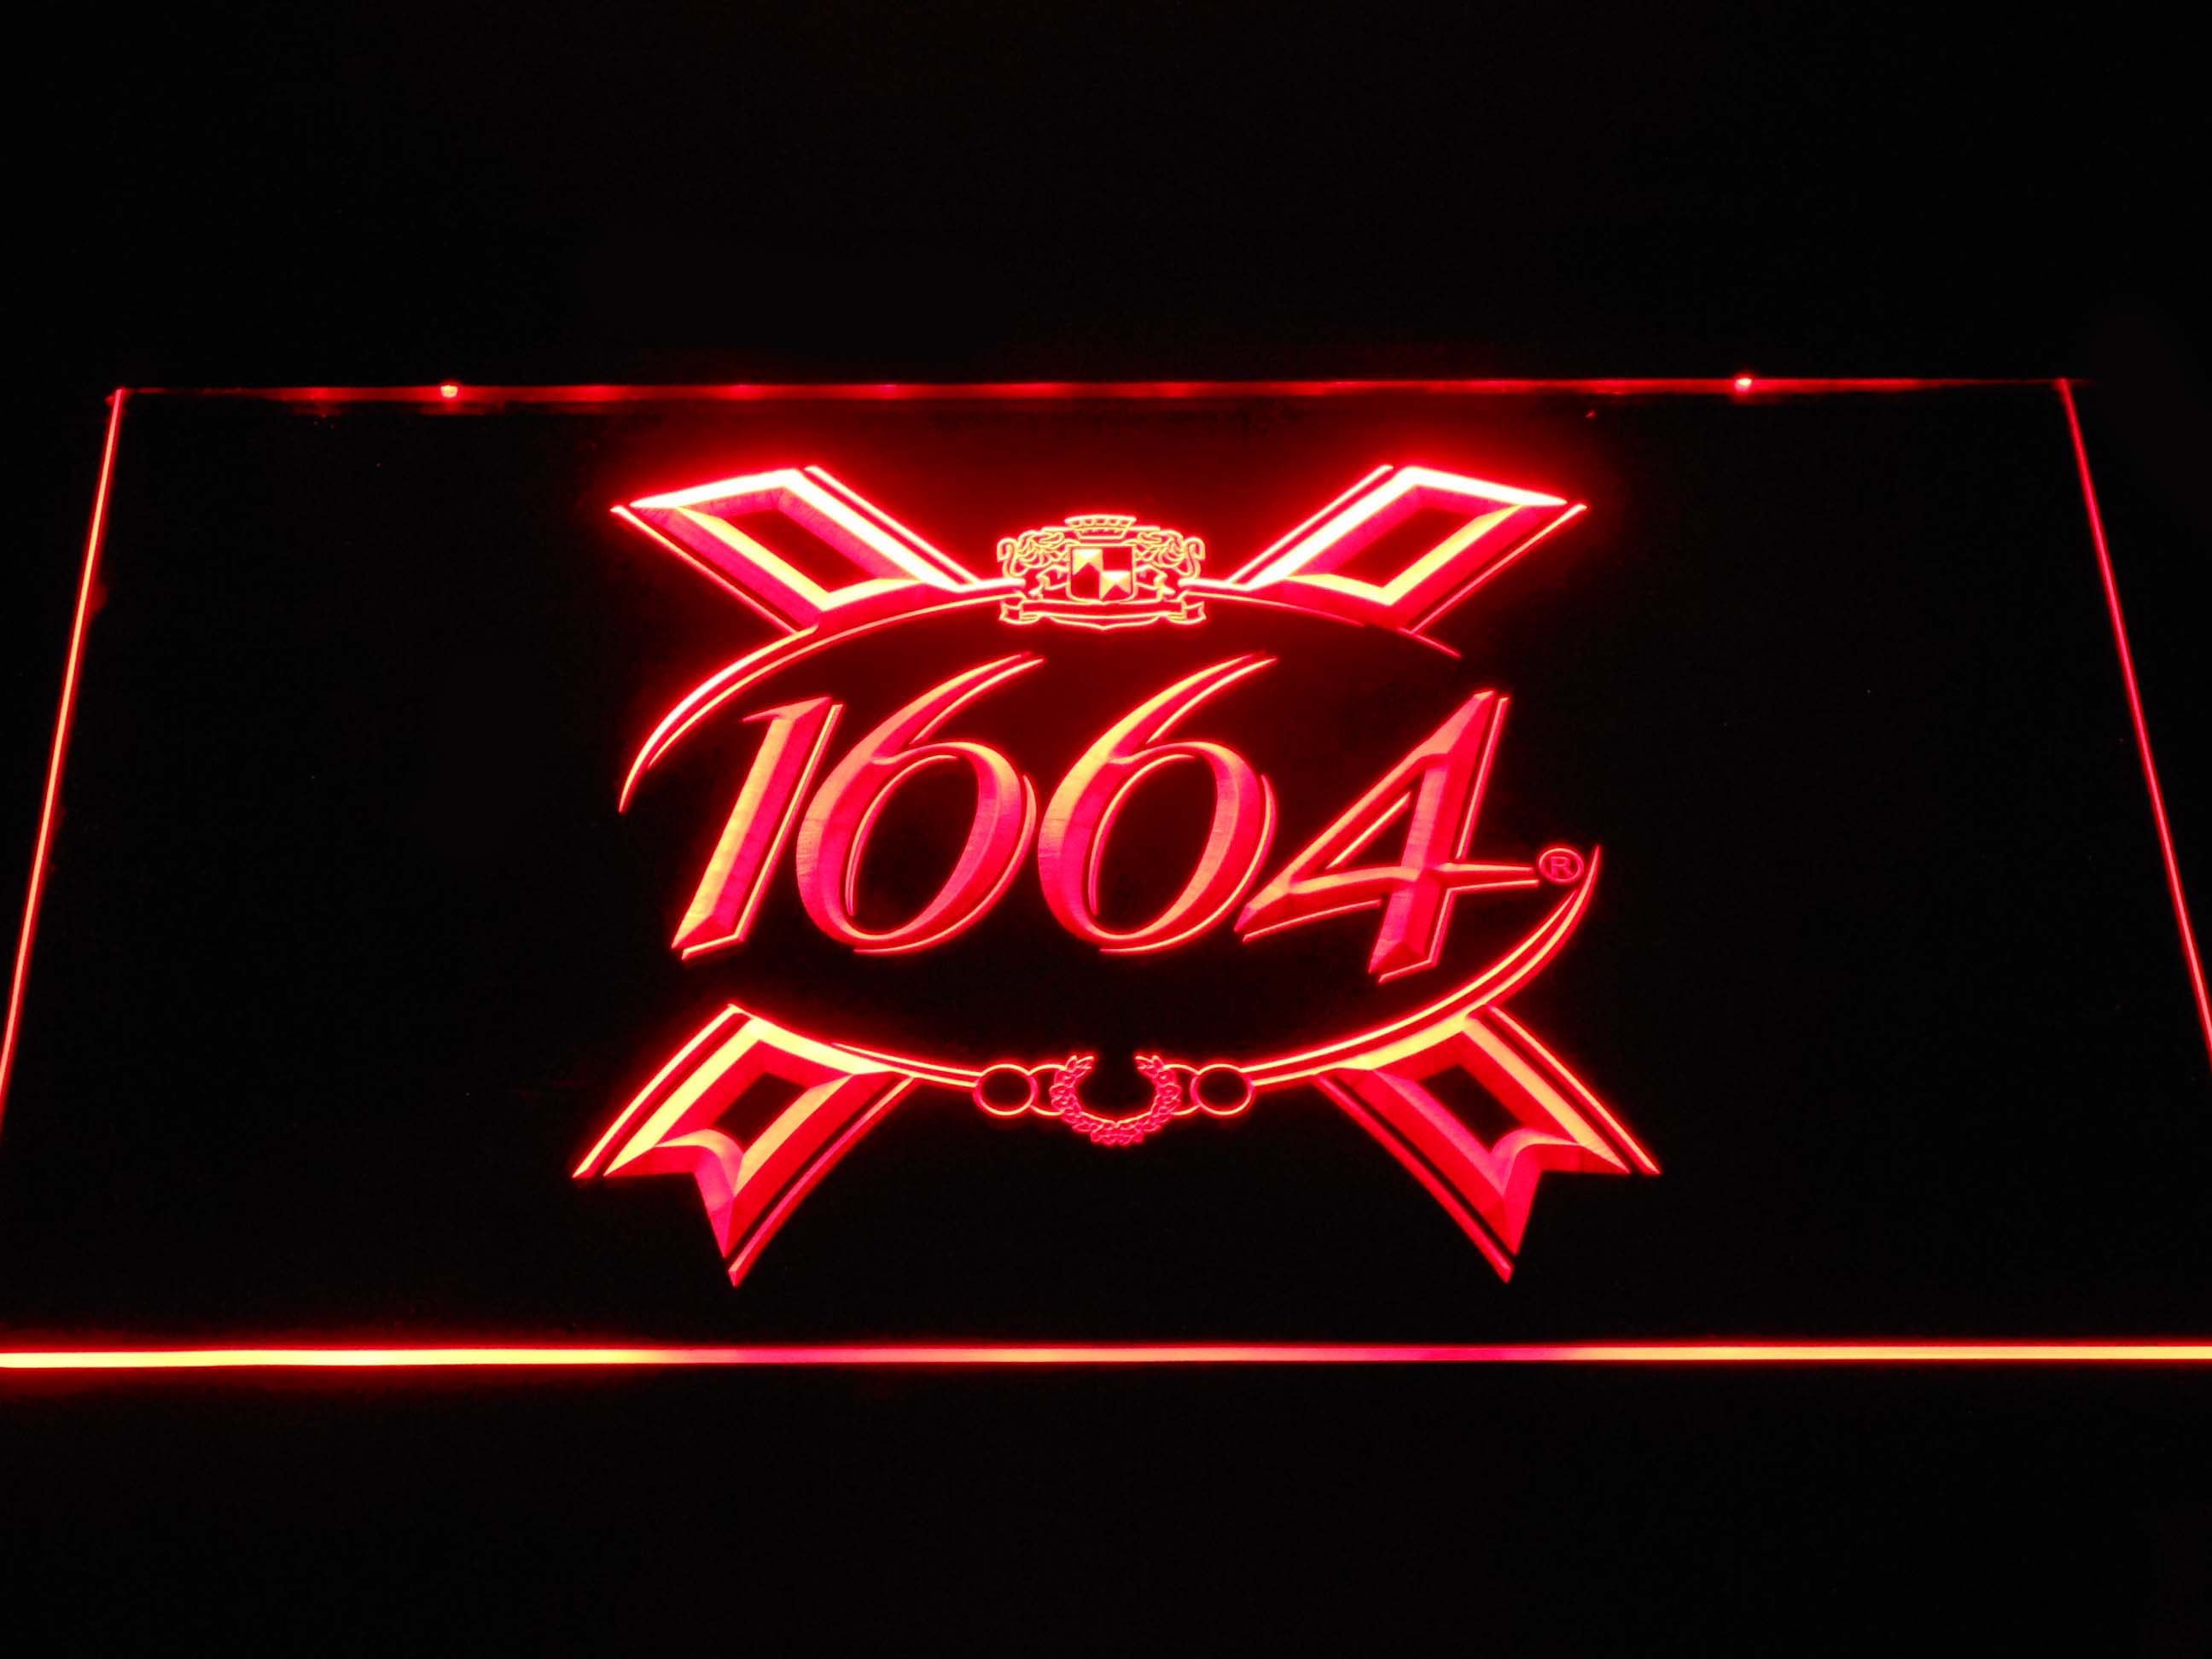 1664 Beer Neon LED Light Sign